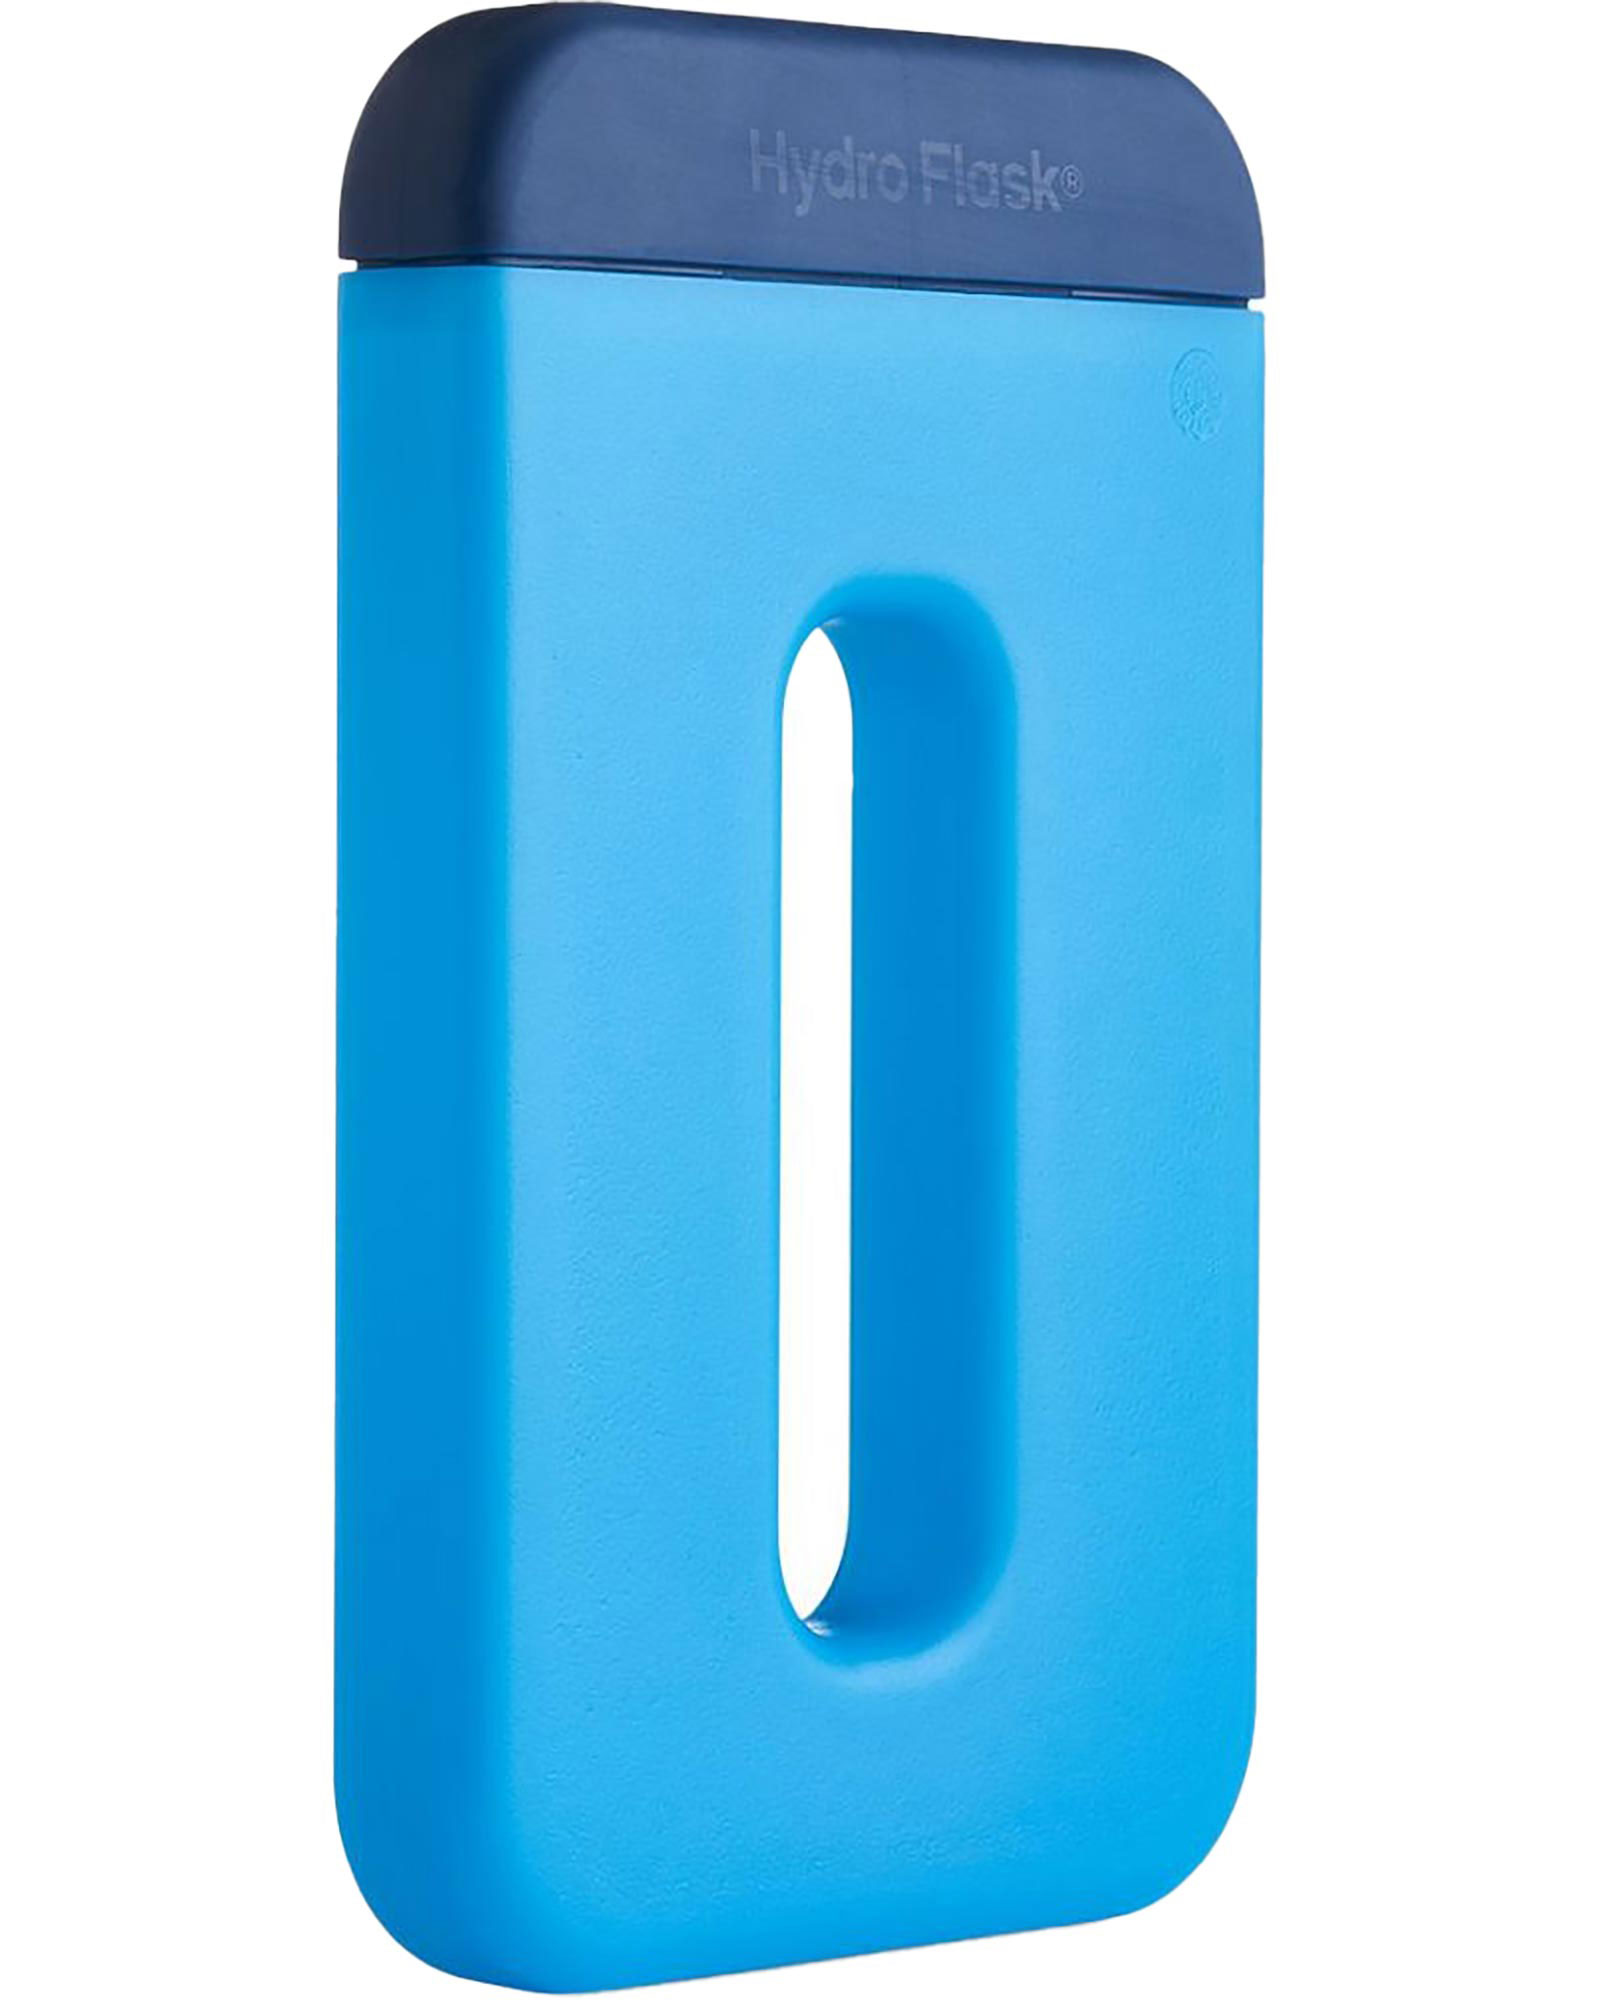 Hydro Flask Medium Ice Pack